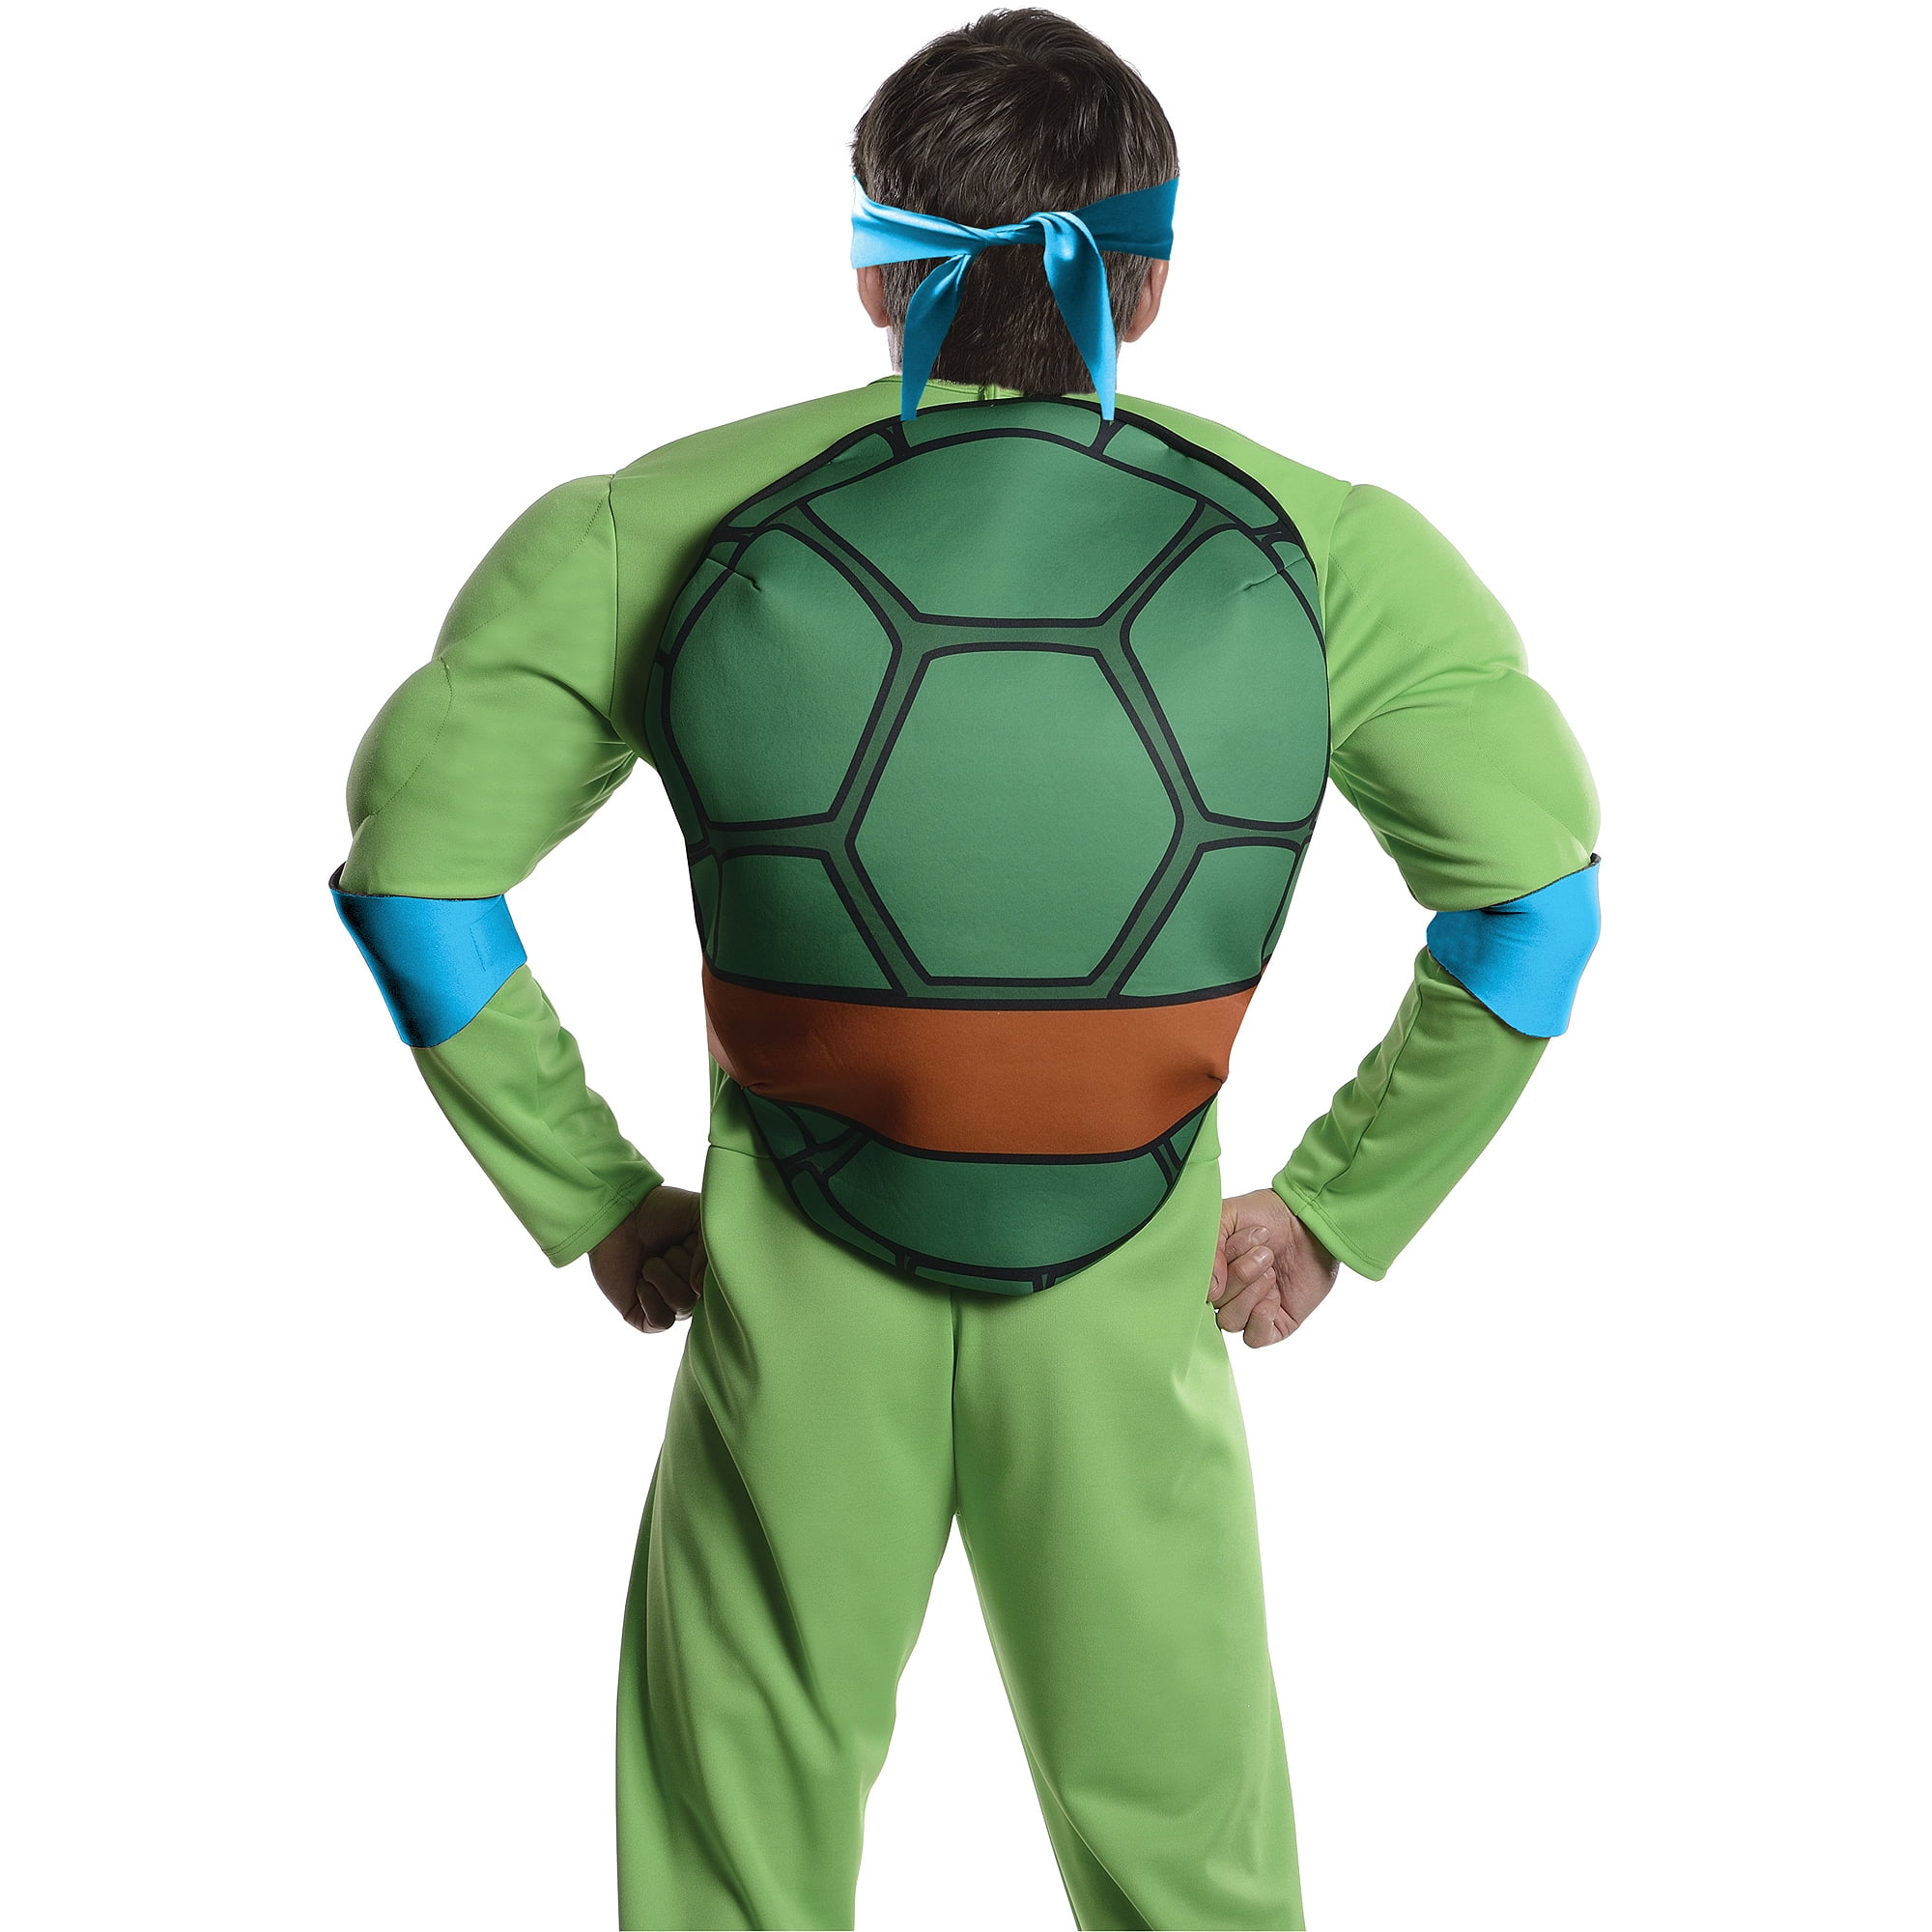 Leonardo Ninja Turtles Second Skin Costume